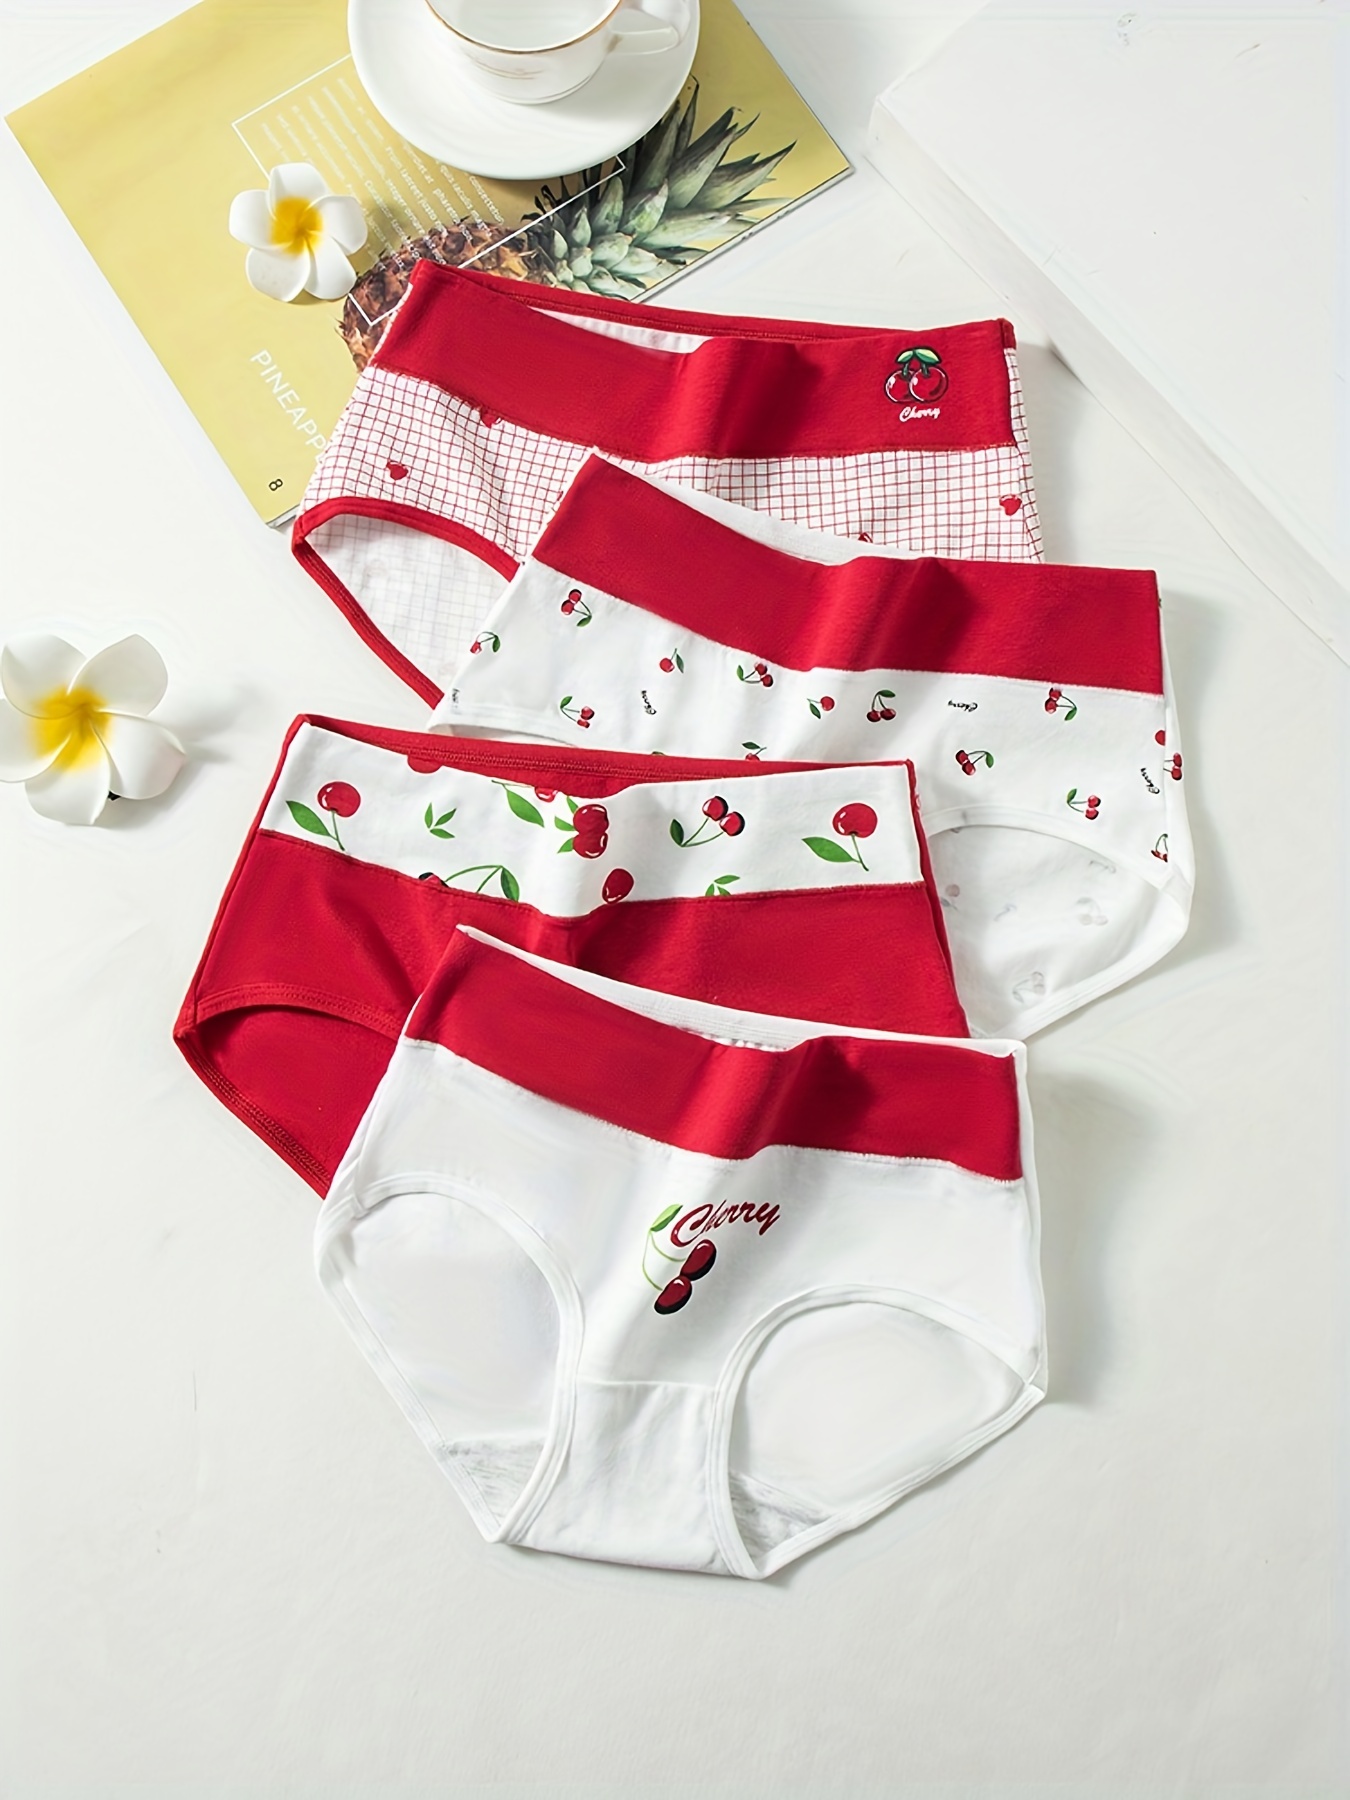 Cherry Beautiful Women's Lace Underwear On A Plain Pastel